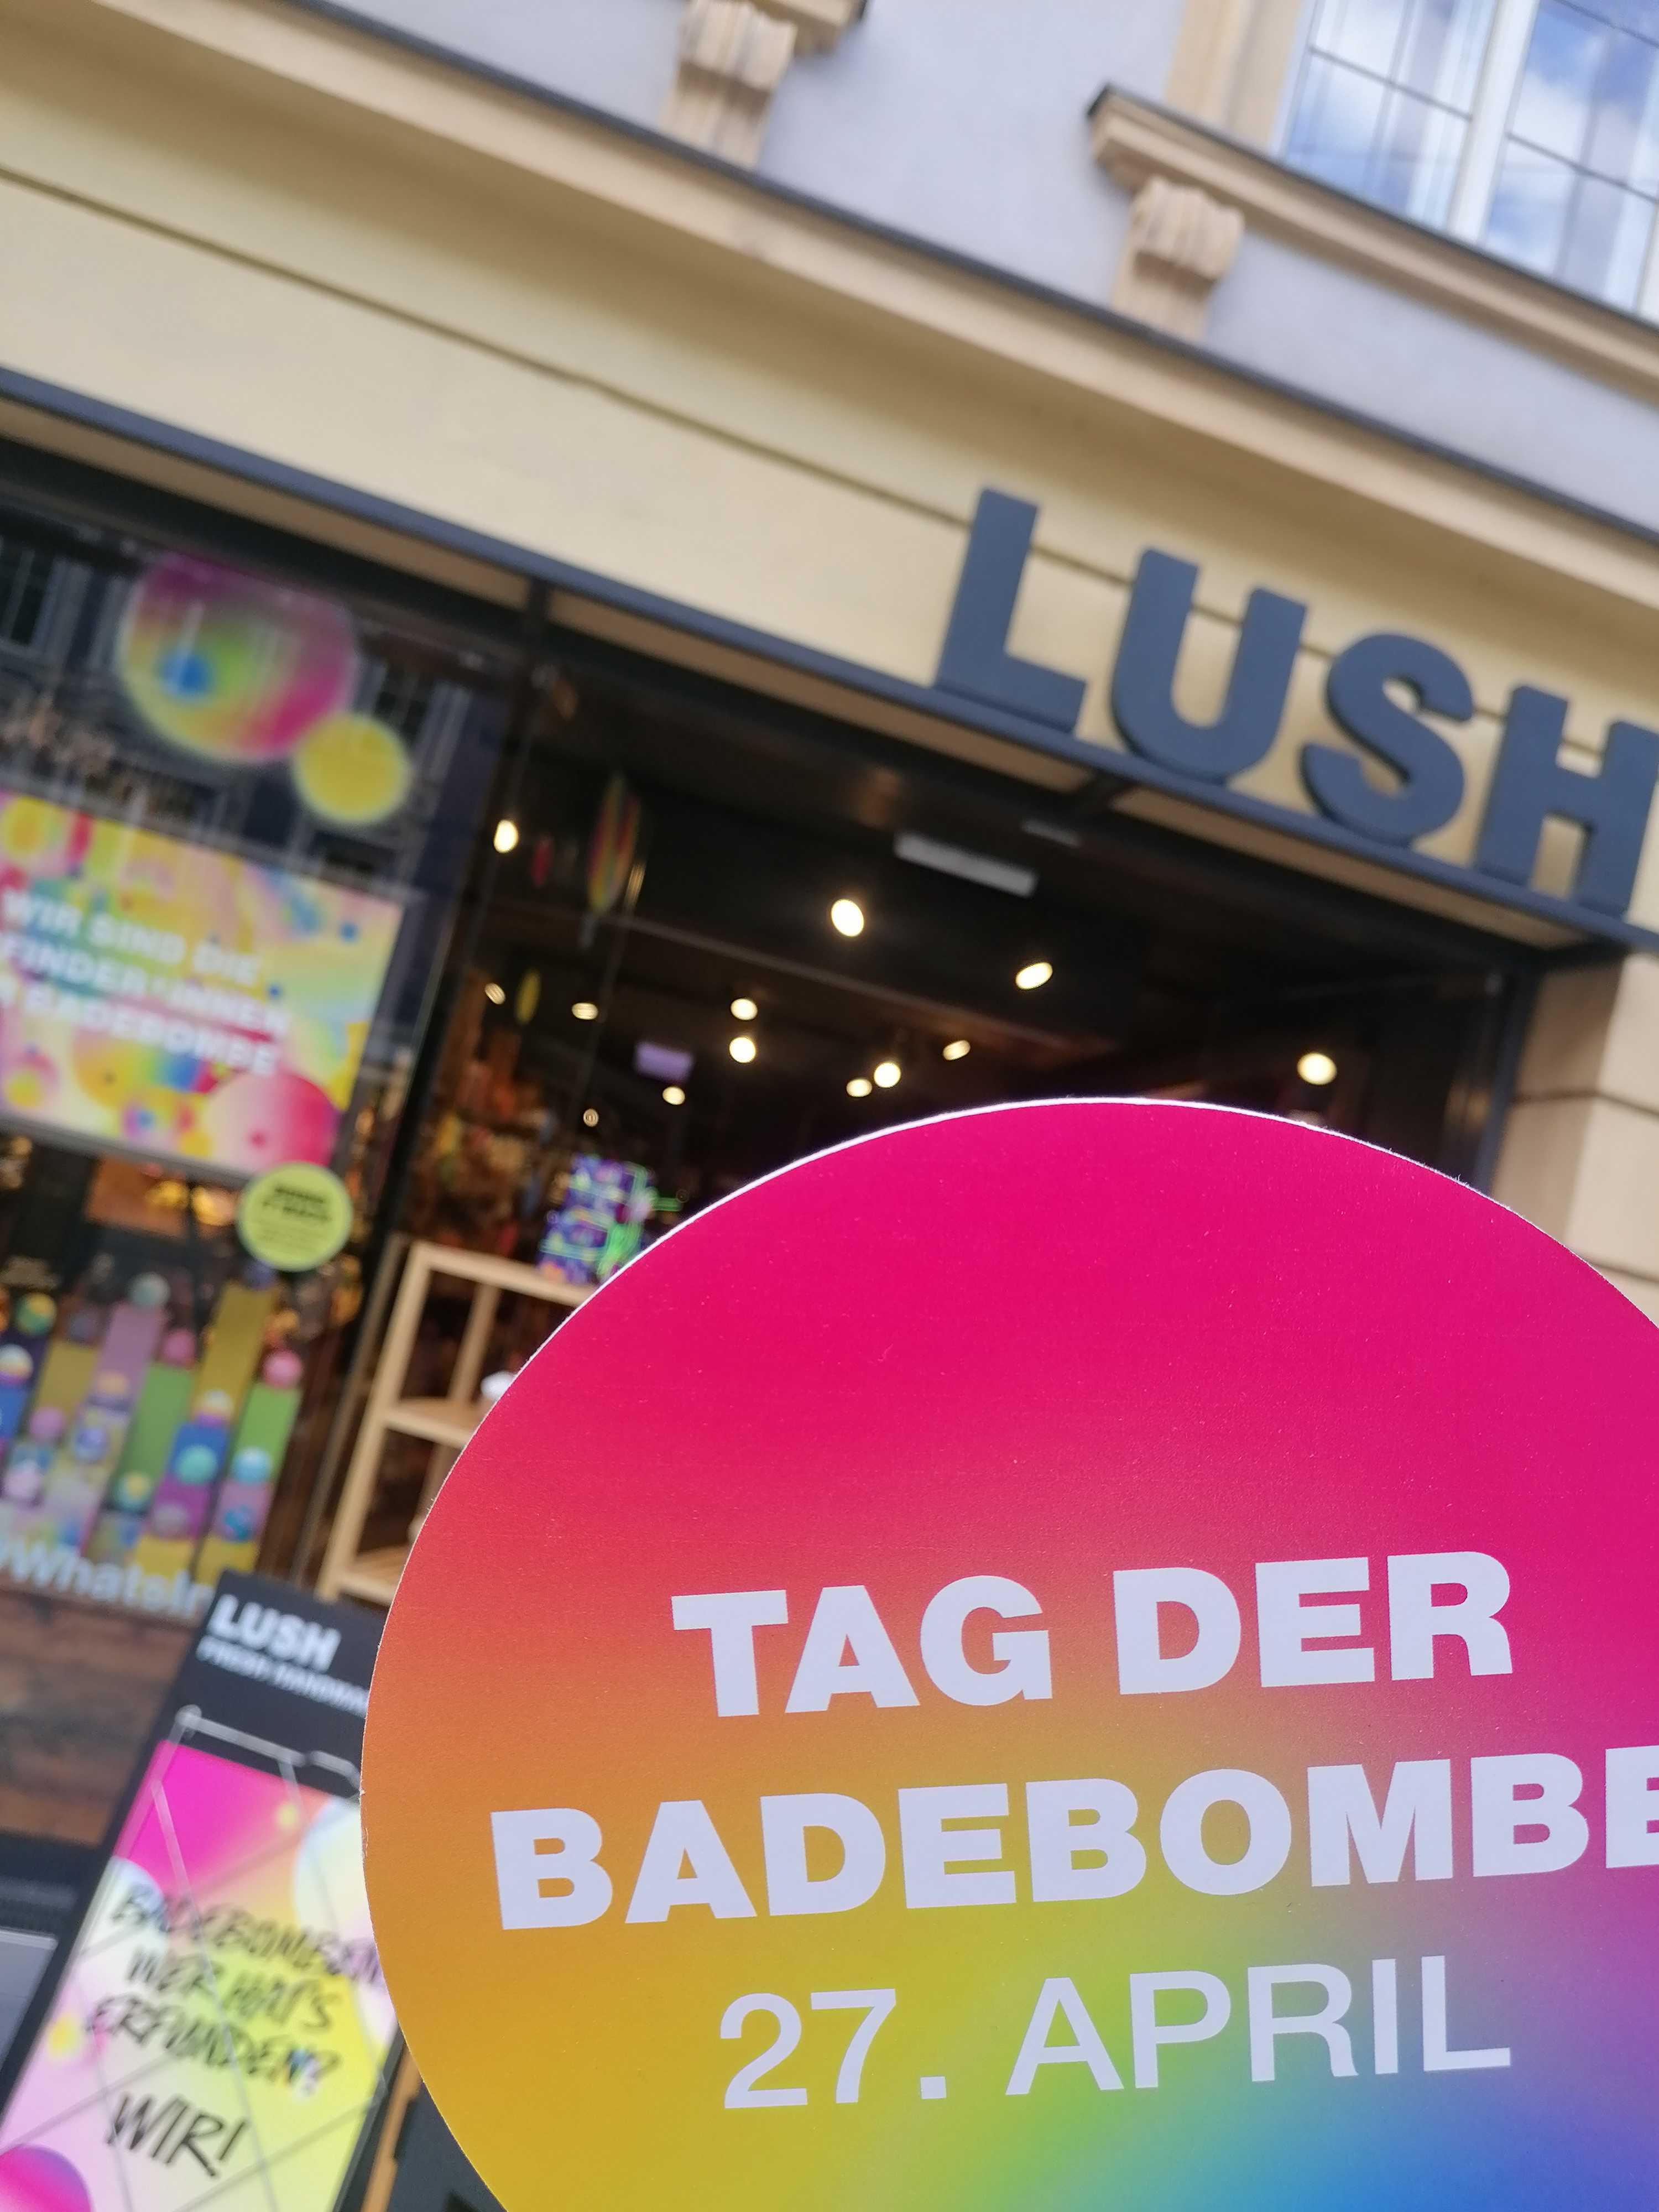 Lush Cosmetics Innsbruck, Maria-Theresien-Straße 34 in Innsbruck